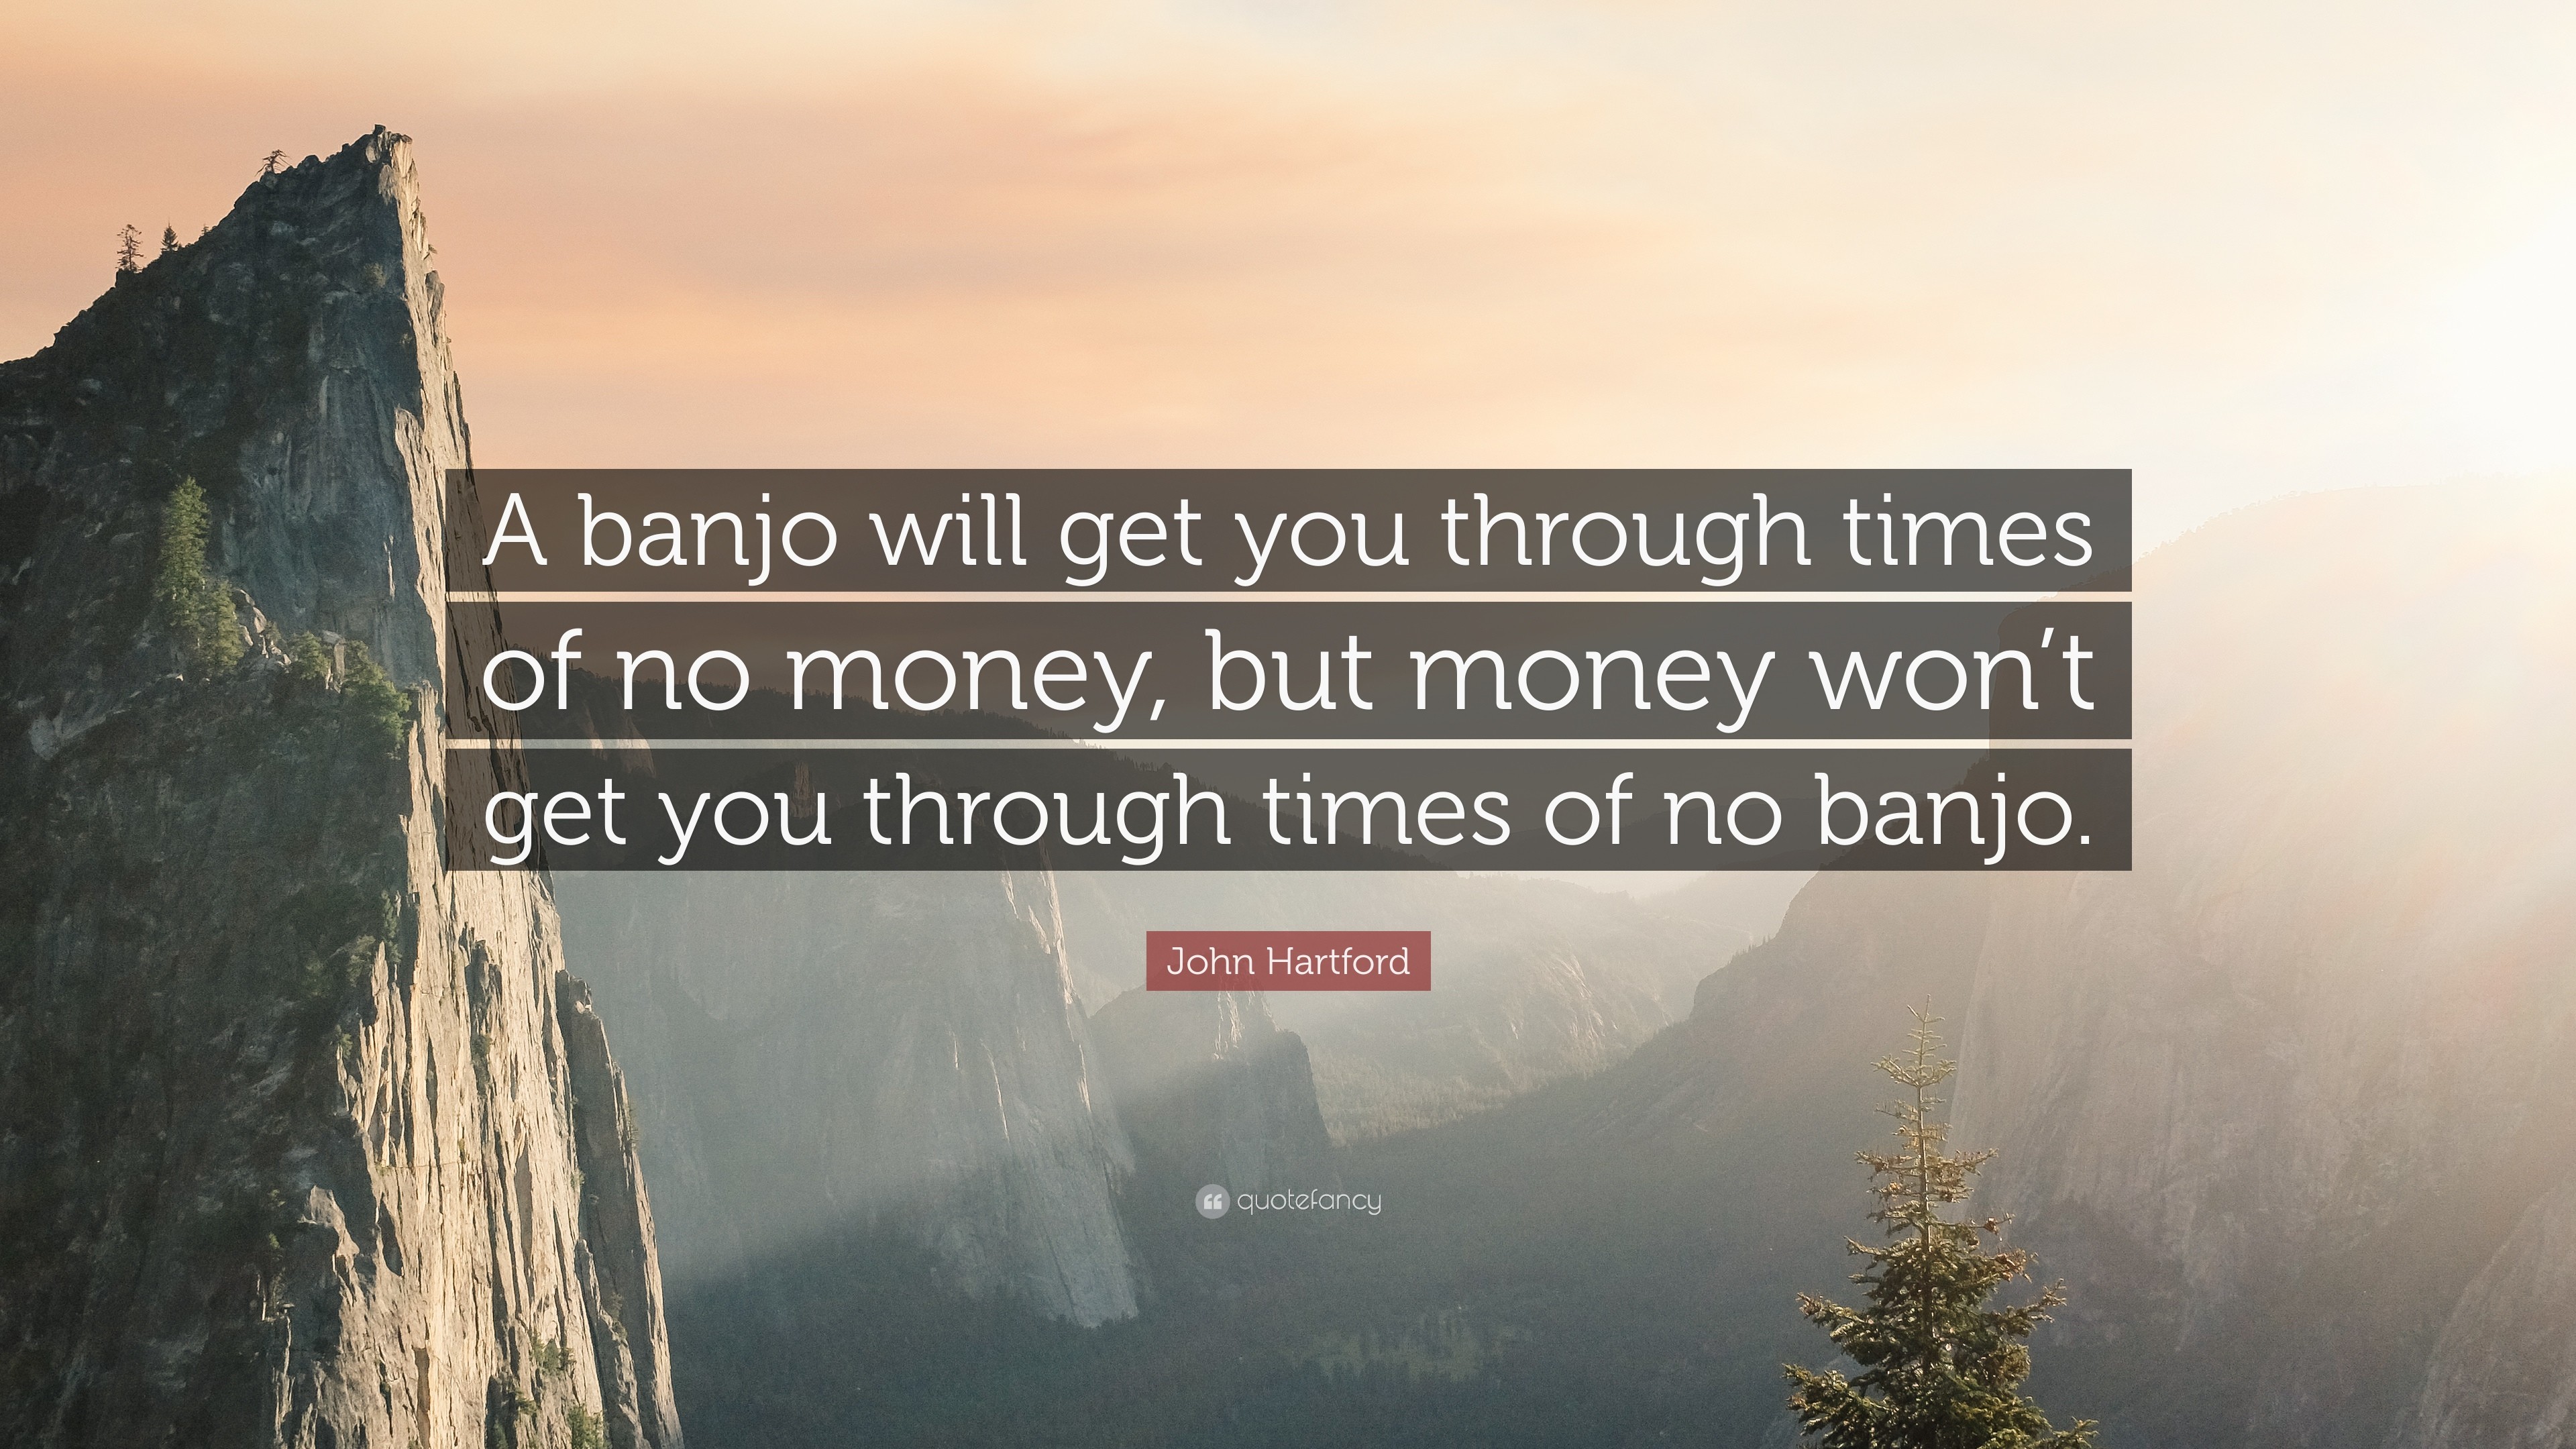 3840x2160 John Hartford Quote: “A banjo will get you through times of no money,